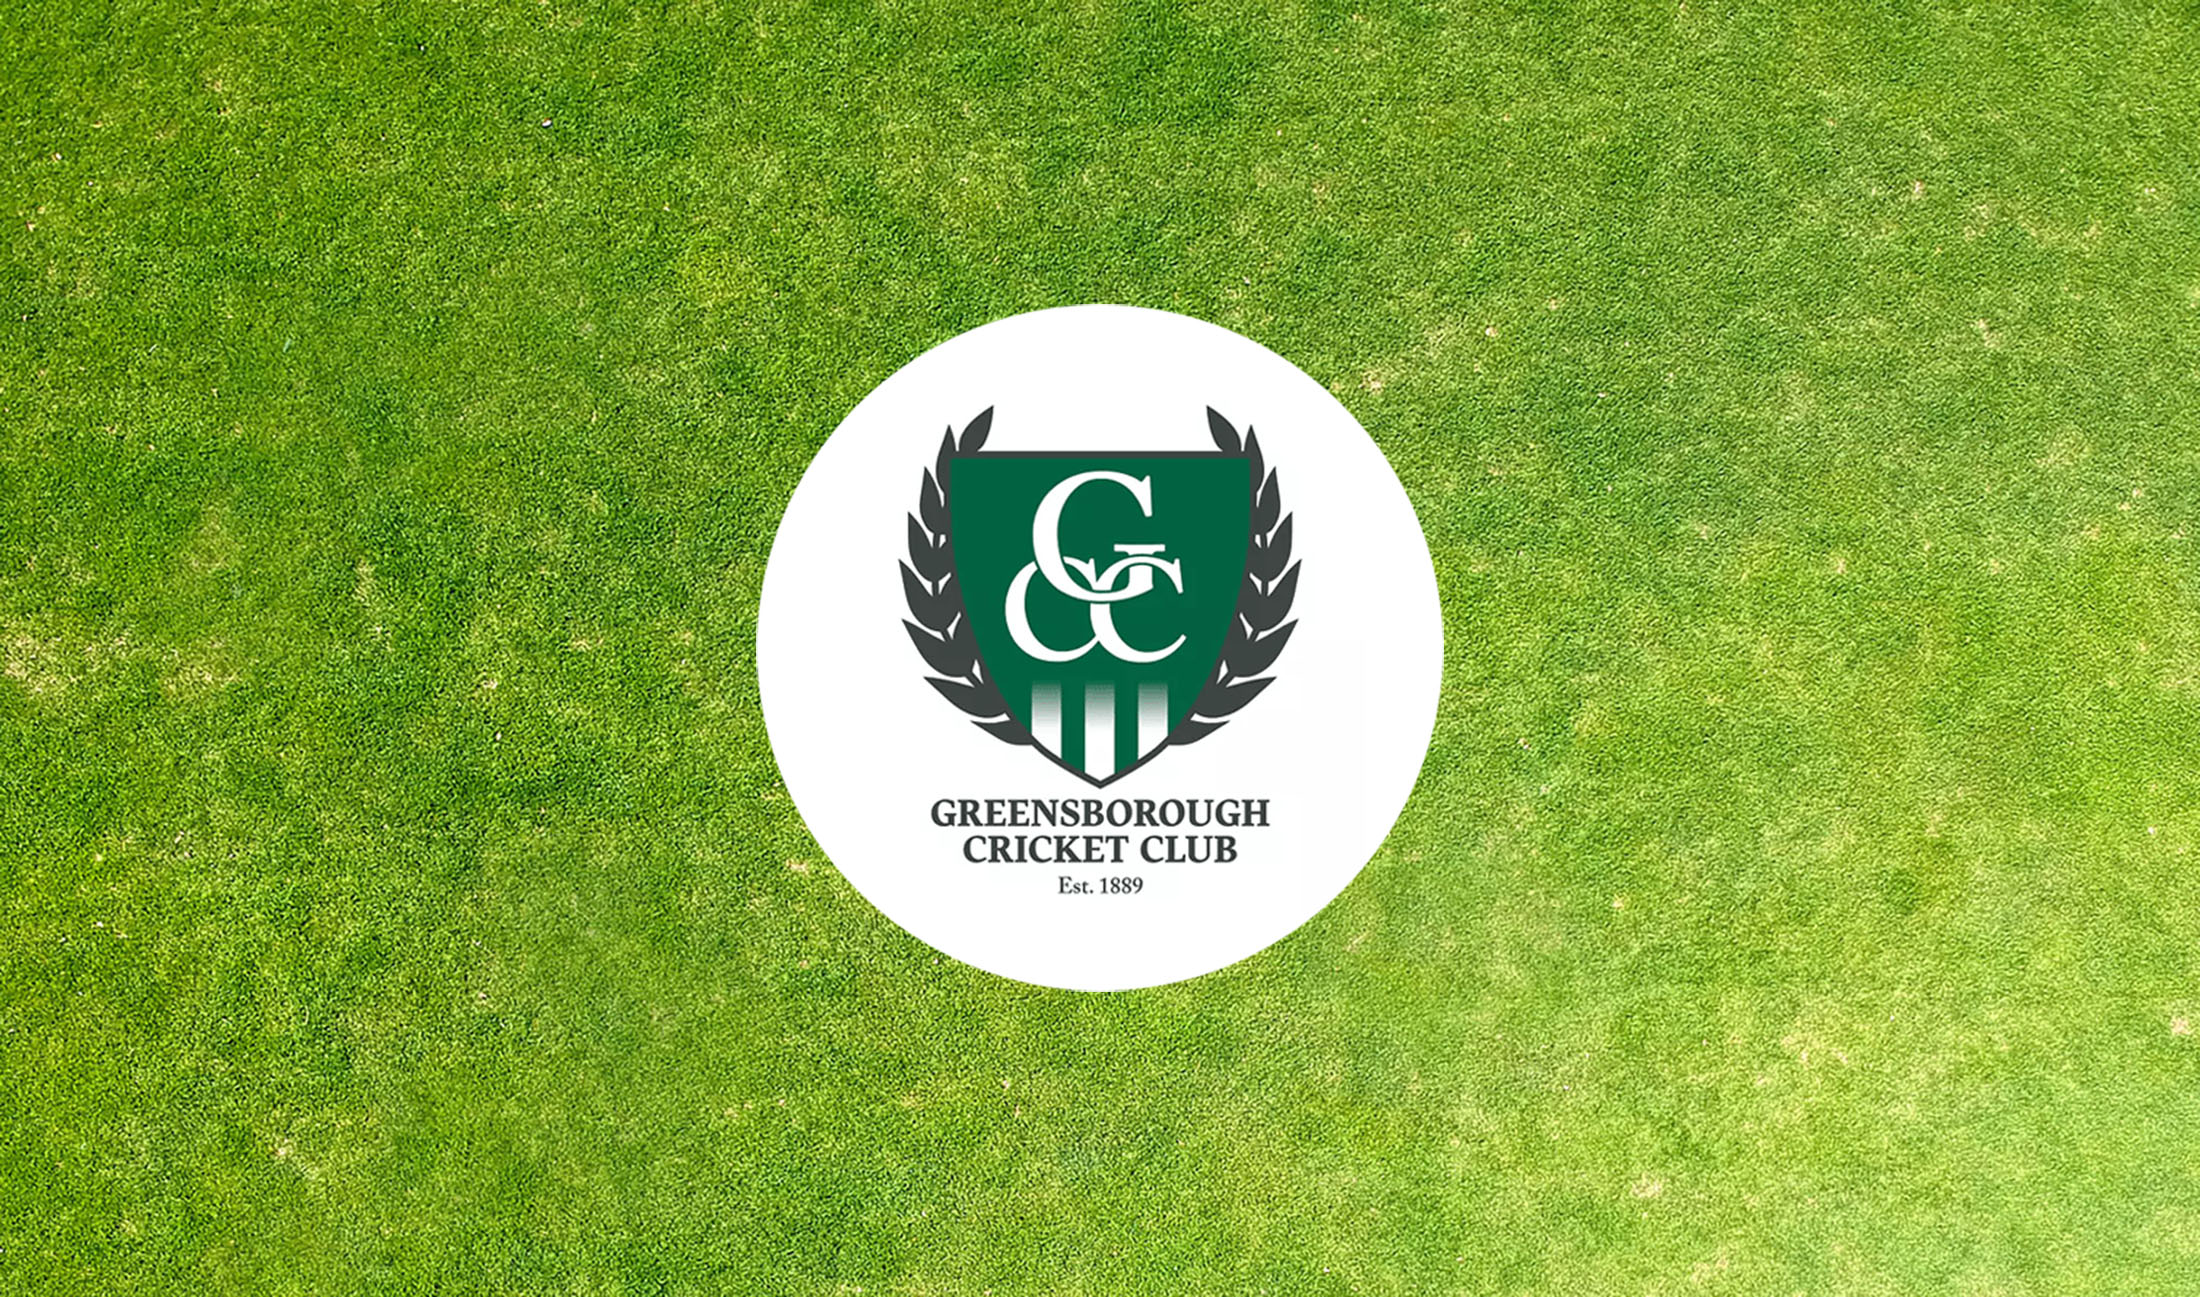 Greensborough Cricket Club seeking Senior Men’s Coach for season 2022/23